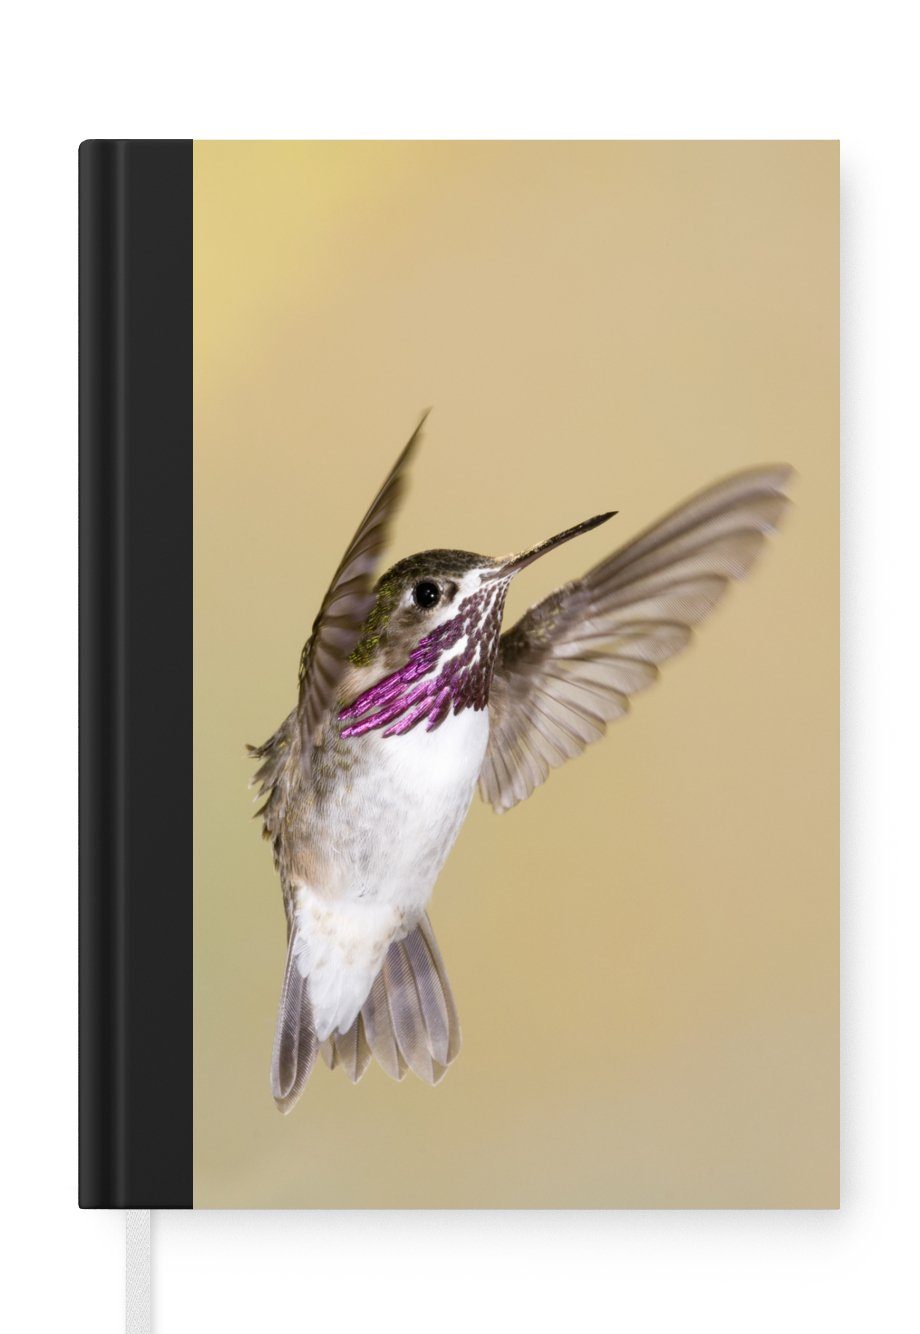 MuchoWow Notizbuch Kolibri - Vogel - Lila, Journal, Merkzettel, Tagebuch, Notizheft, A5, 98 Seiten, Haushaltsbuch